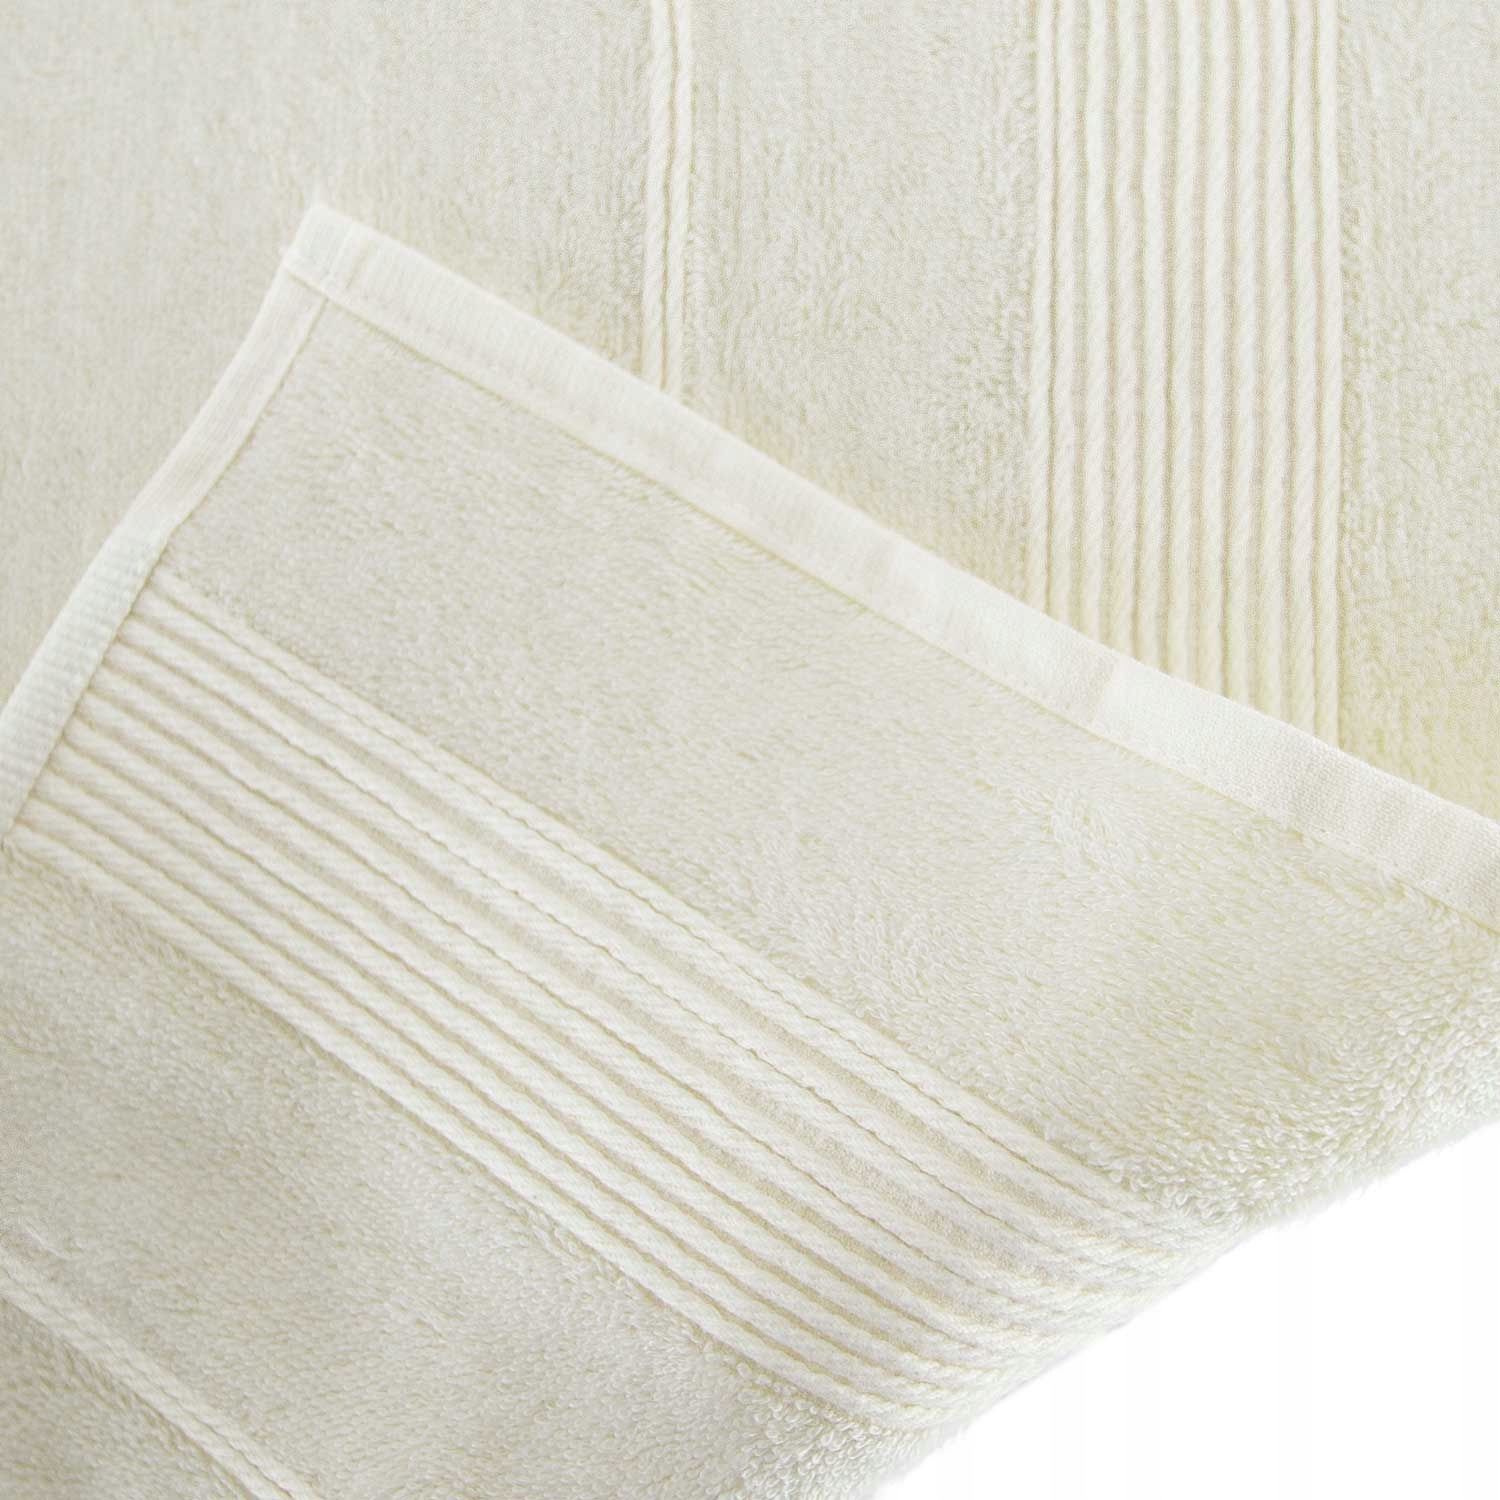 Ręcznik Moreno 50x90 Bamboo kremowy 500g/m2